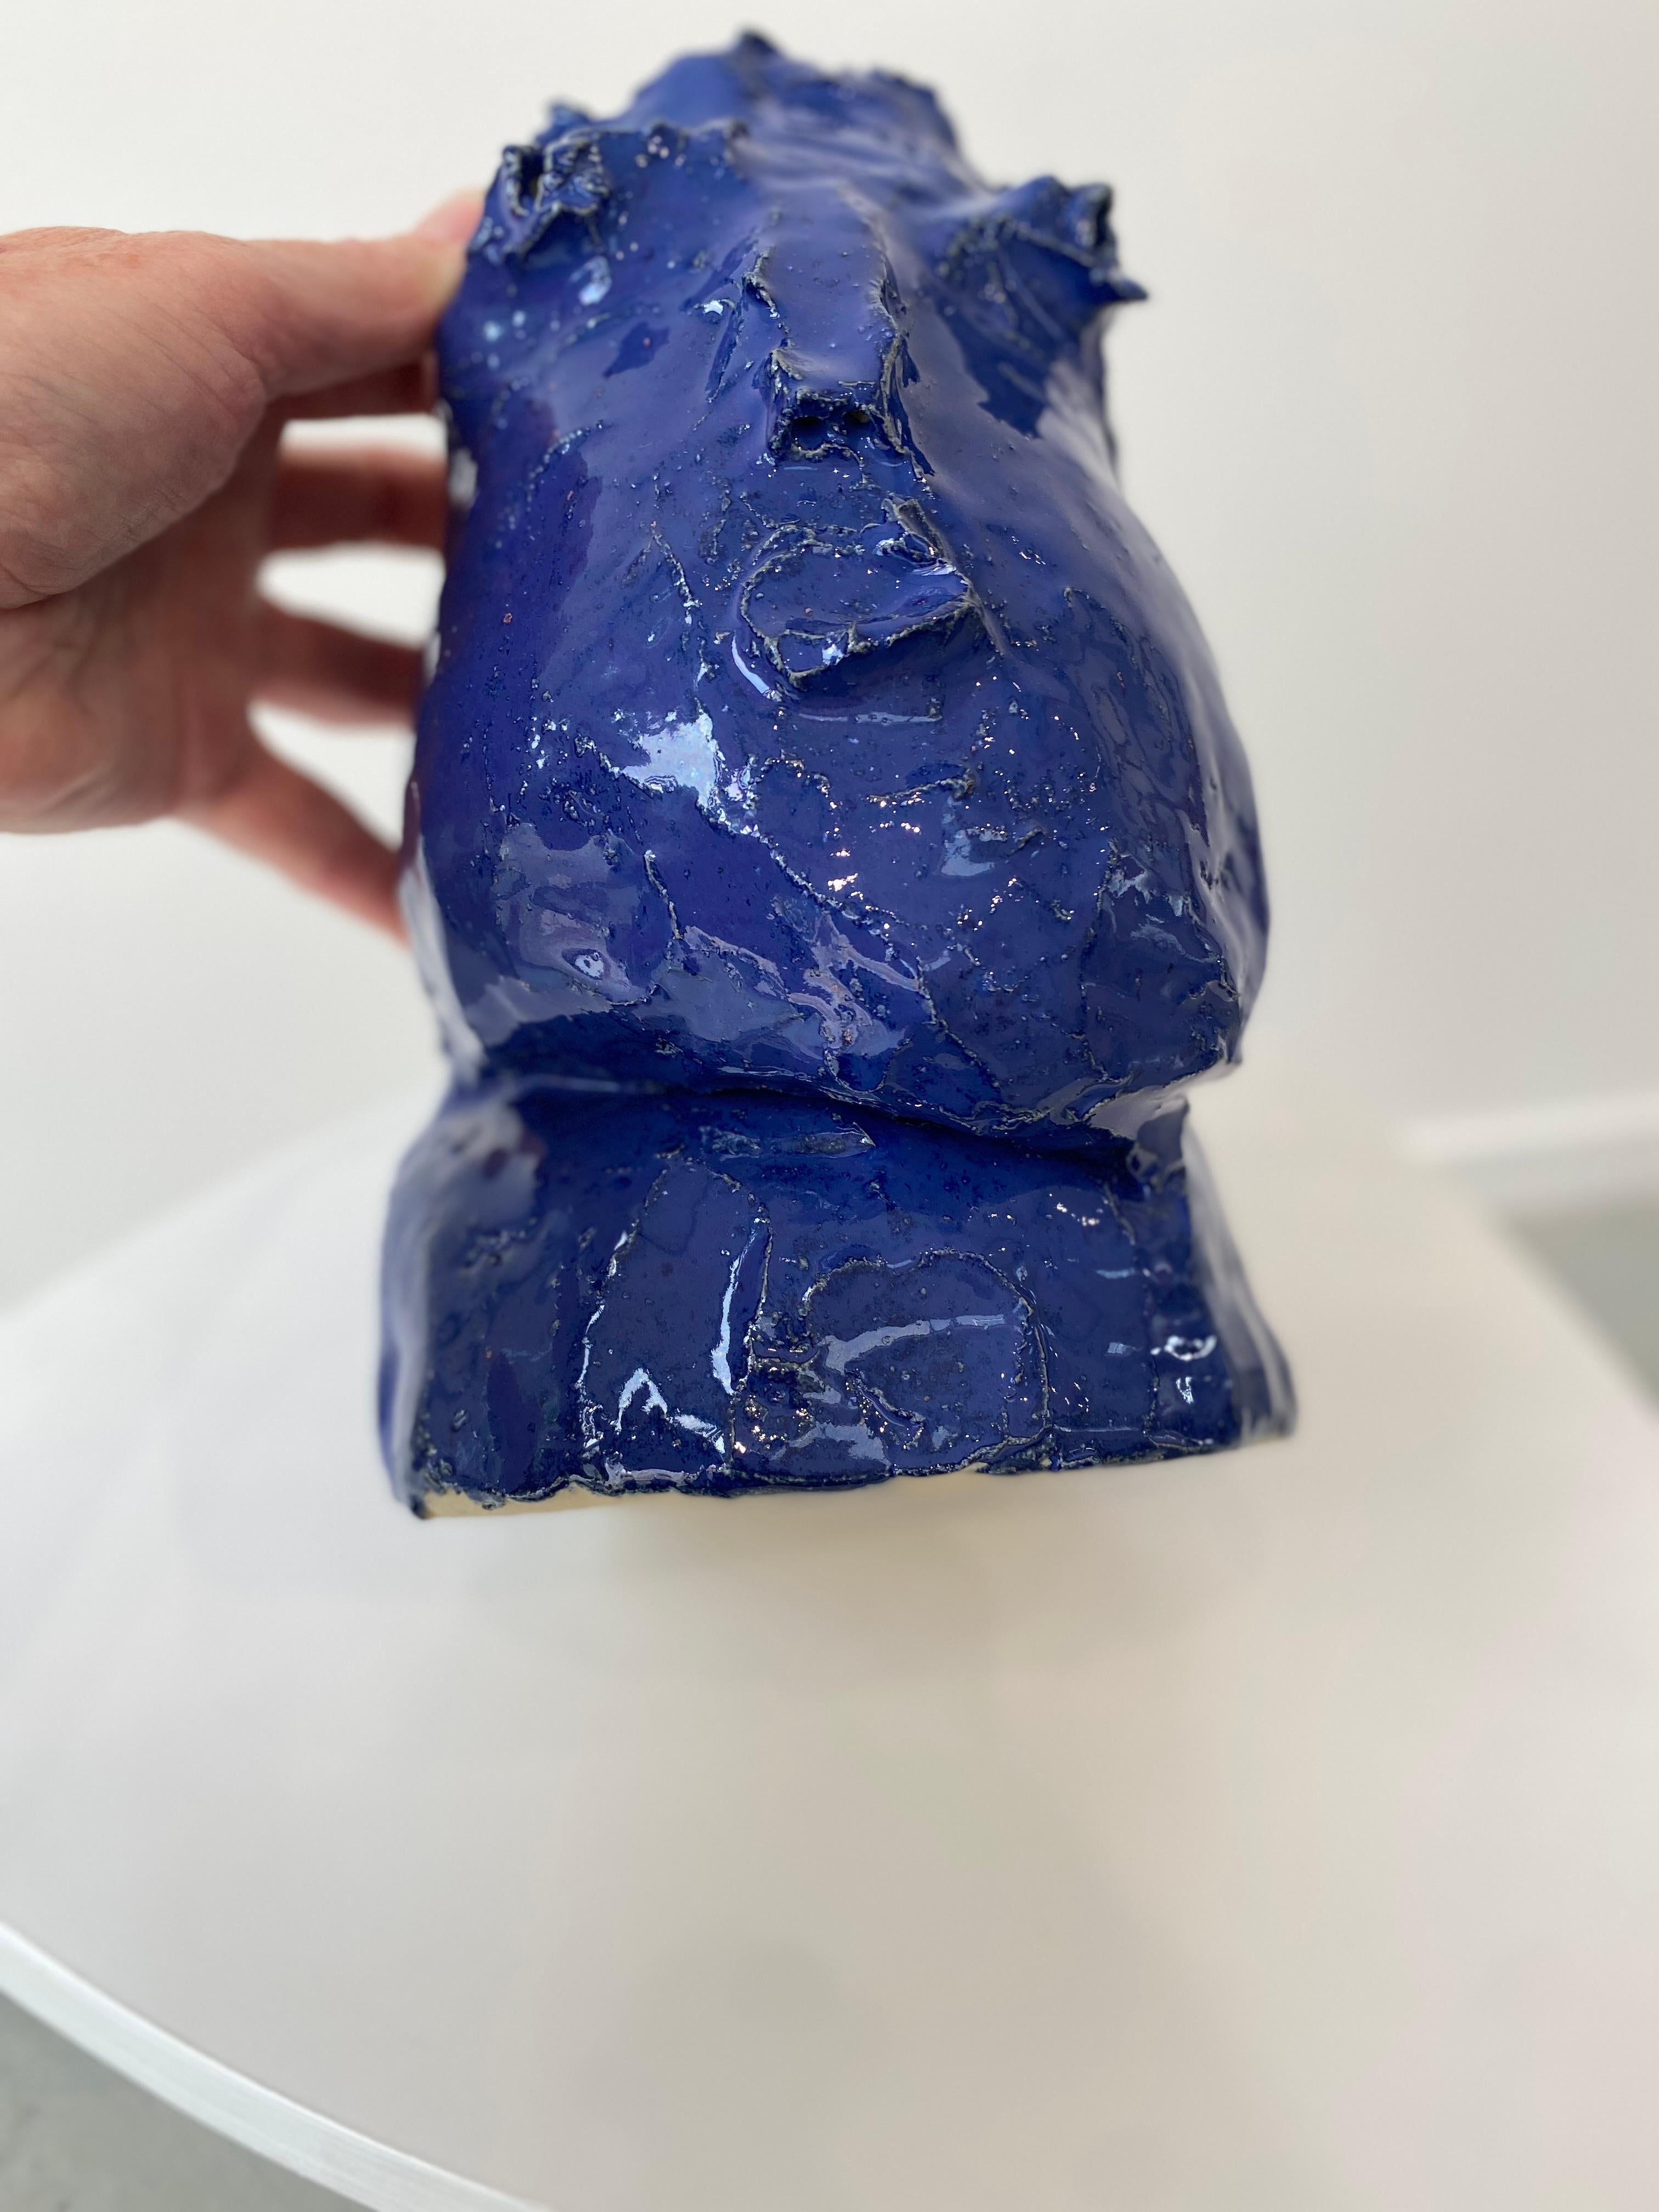 Cobalt blue rustic wabi sabi hand sculpted glazed clay head face vessel vase For Sale 5